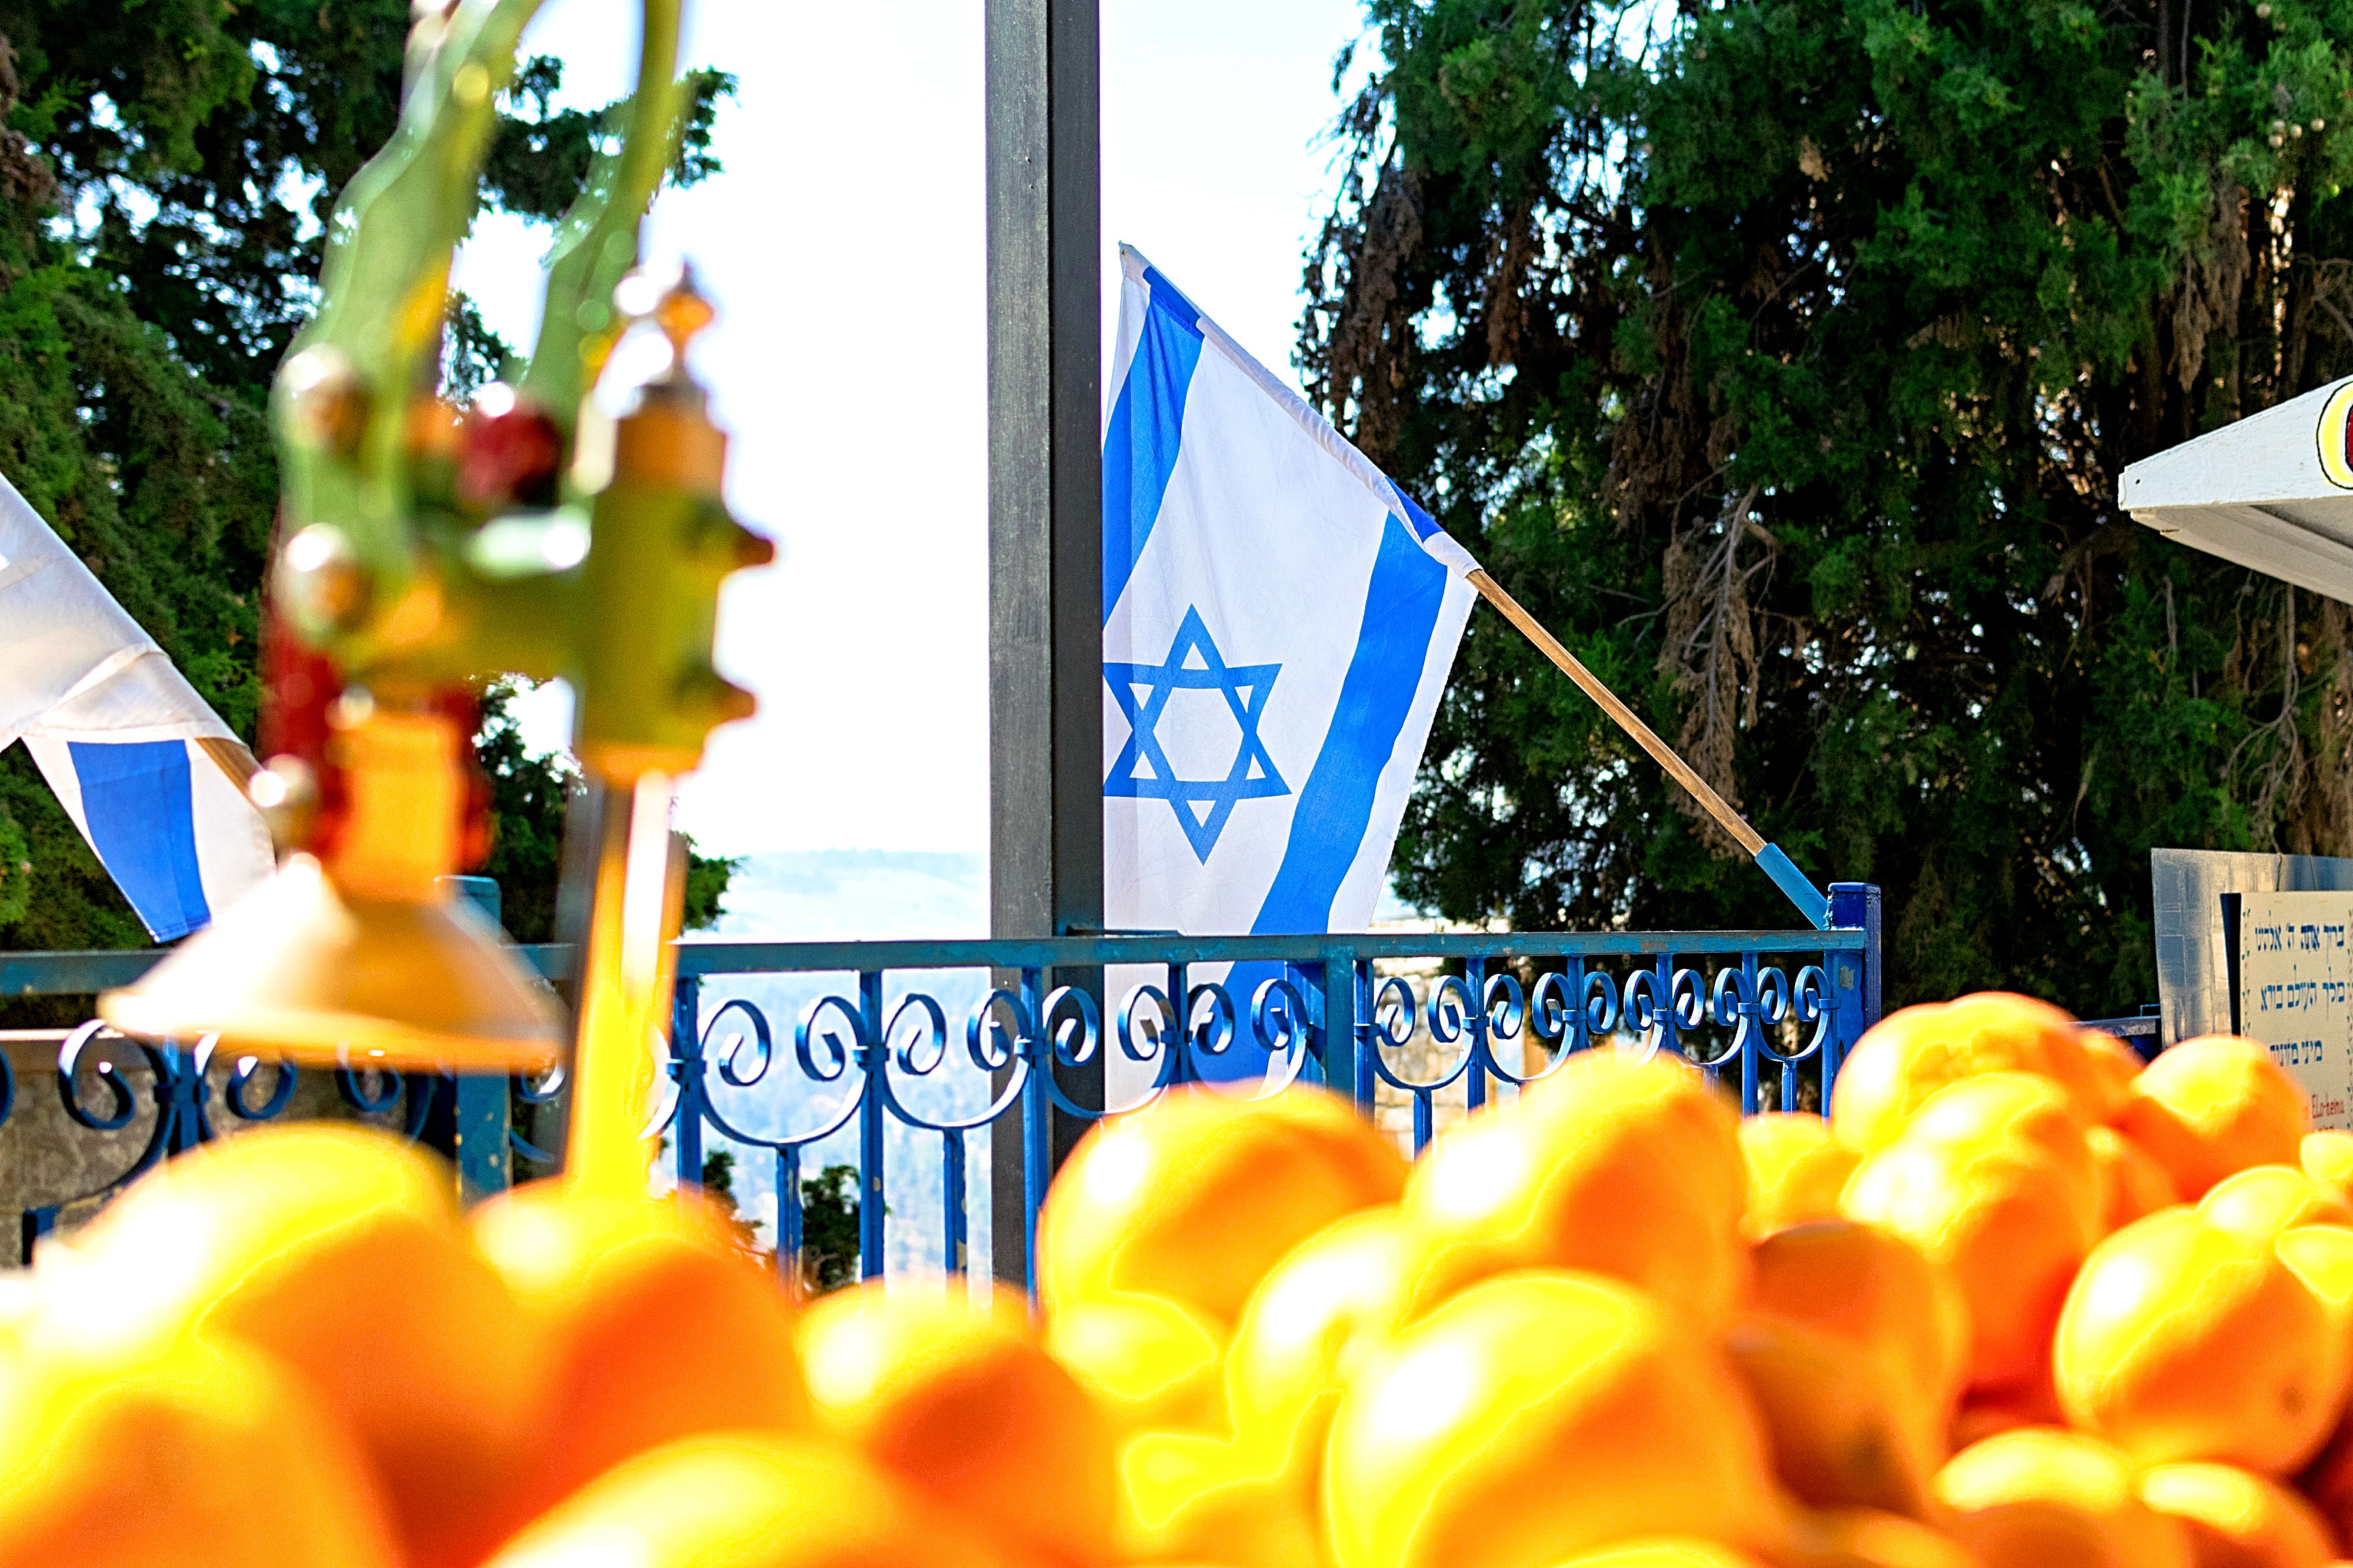 Jaffa oranges against the background of an Israeli flag